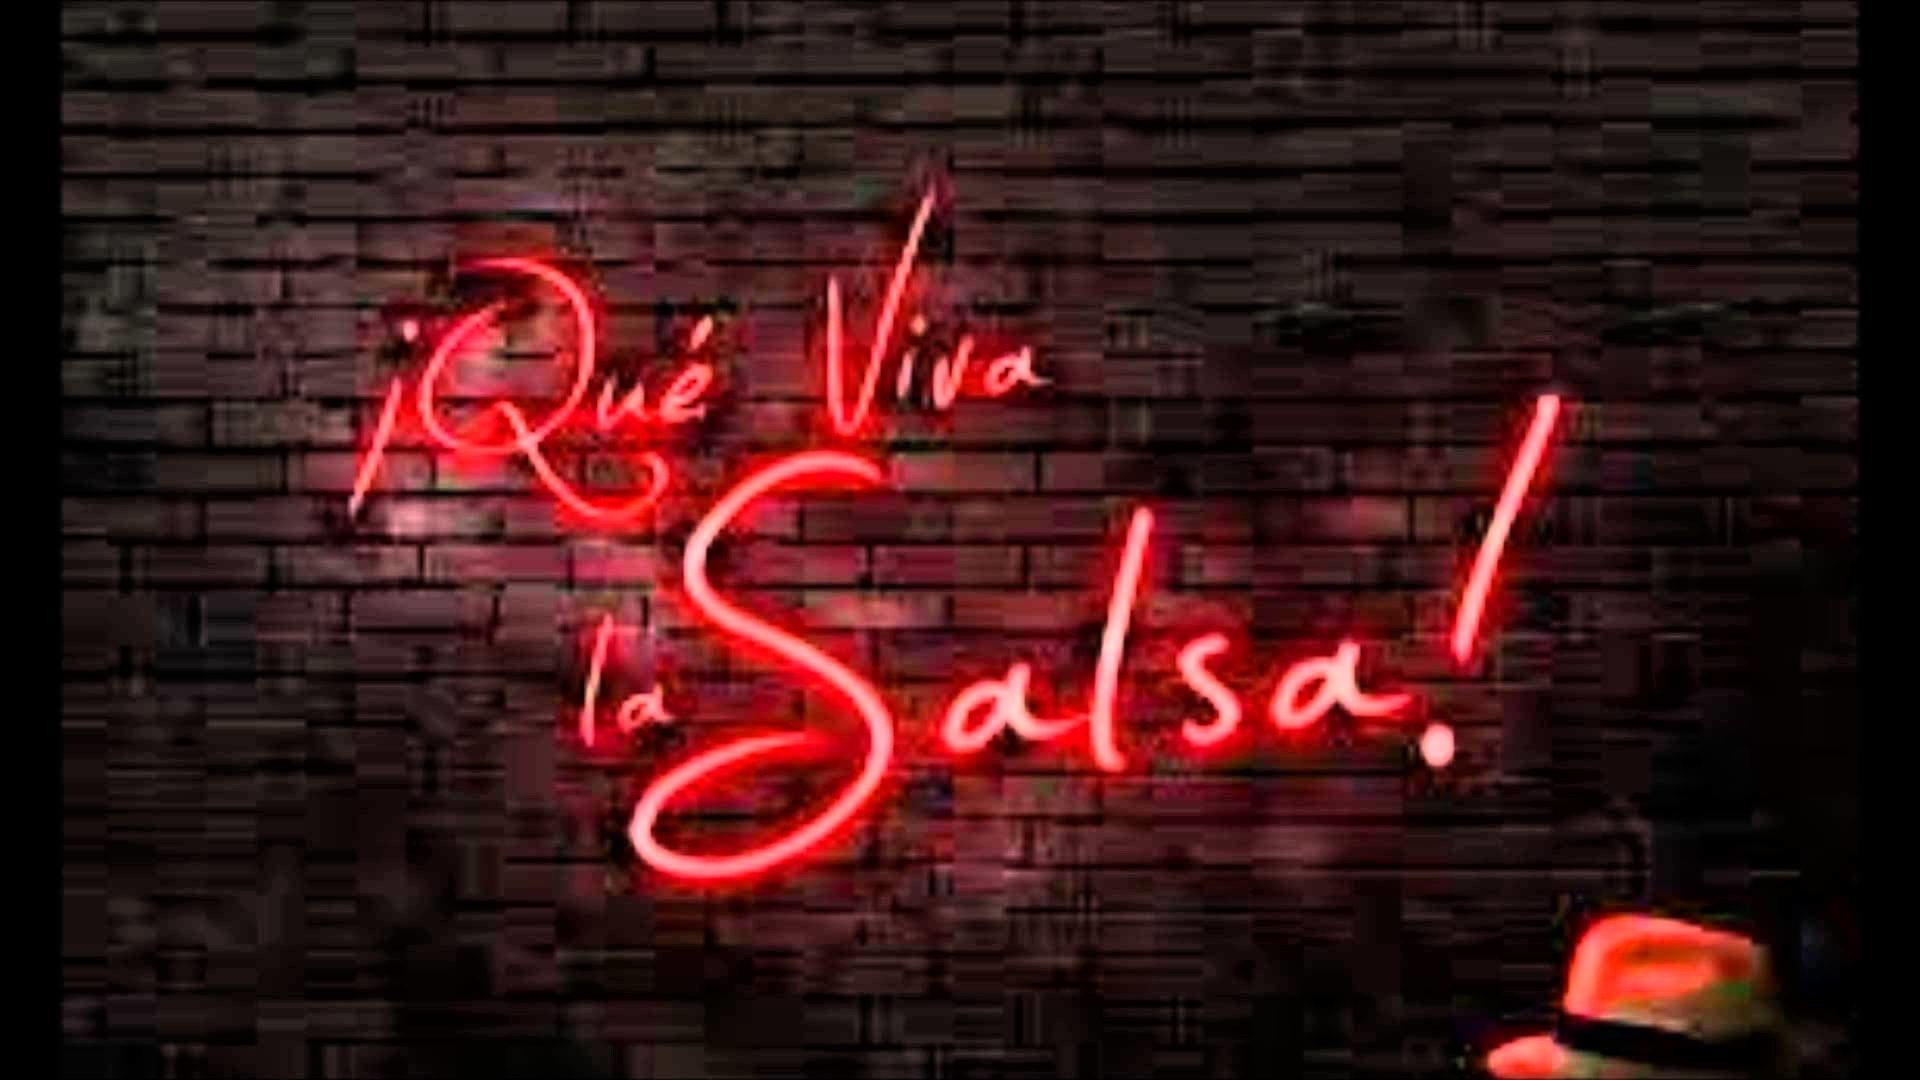 Salsa Wallpaper Image